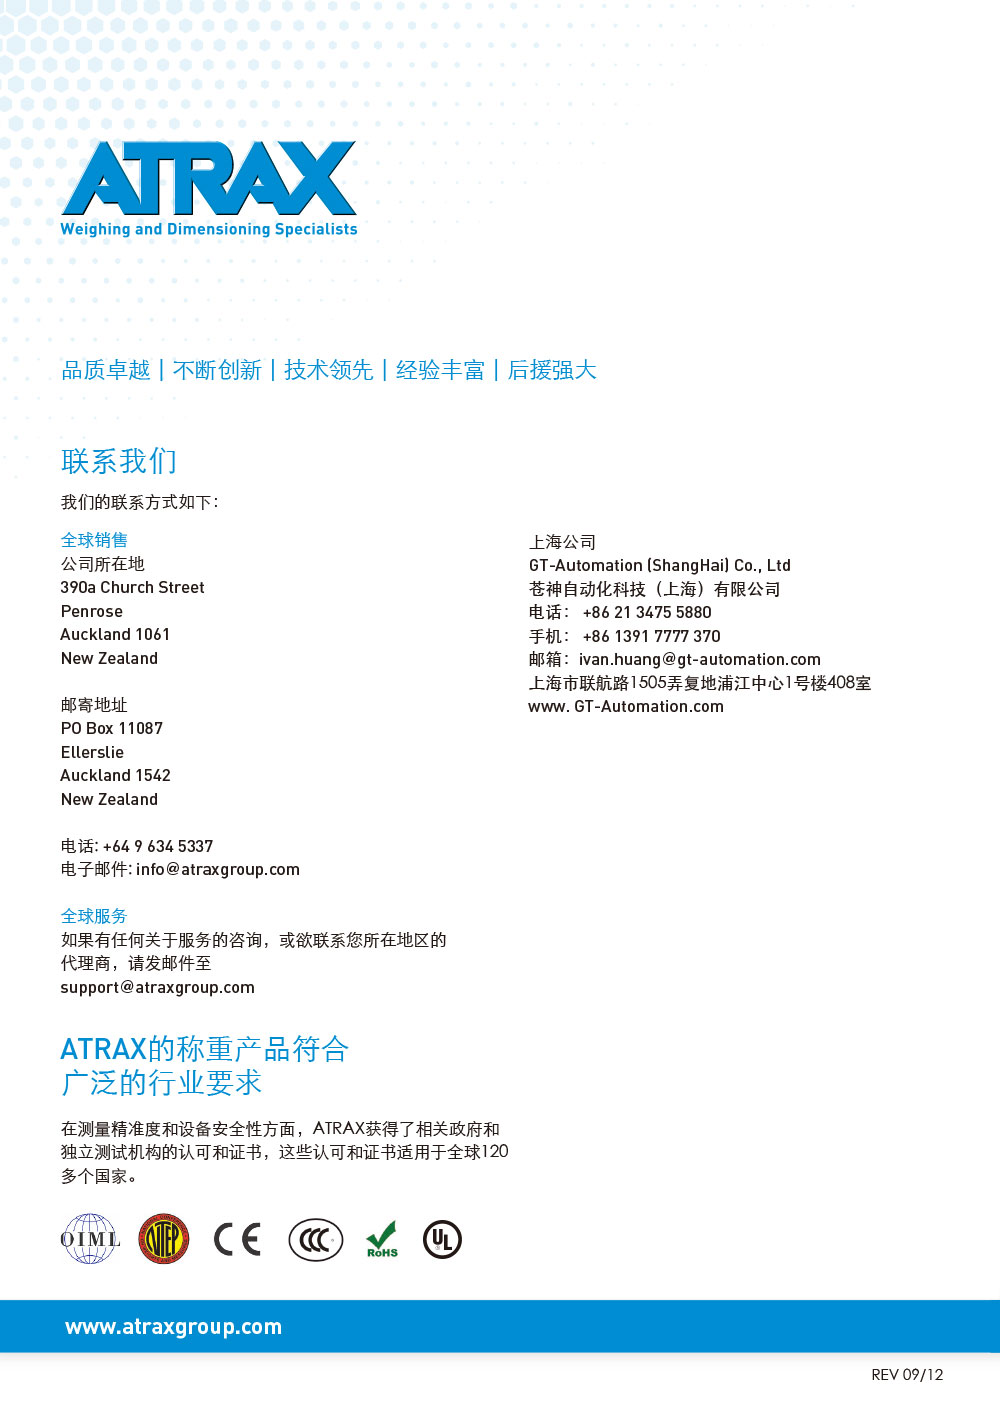 ATRAX-机场行李秤宣传册-Chinese-Brochure_18-8